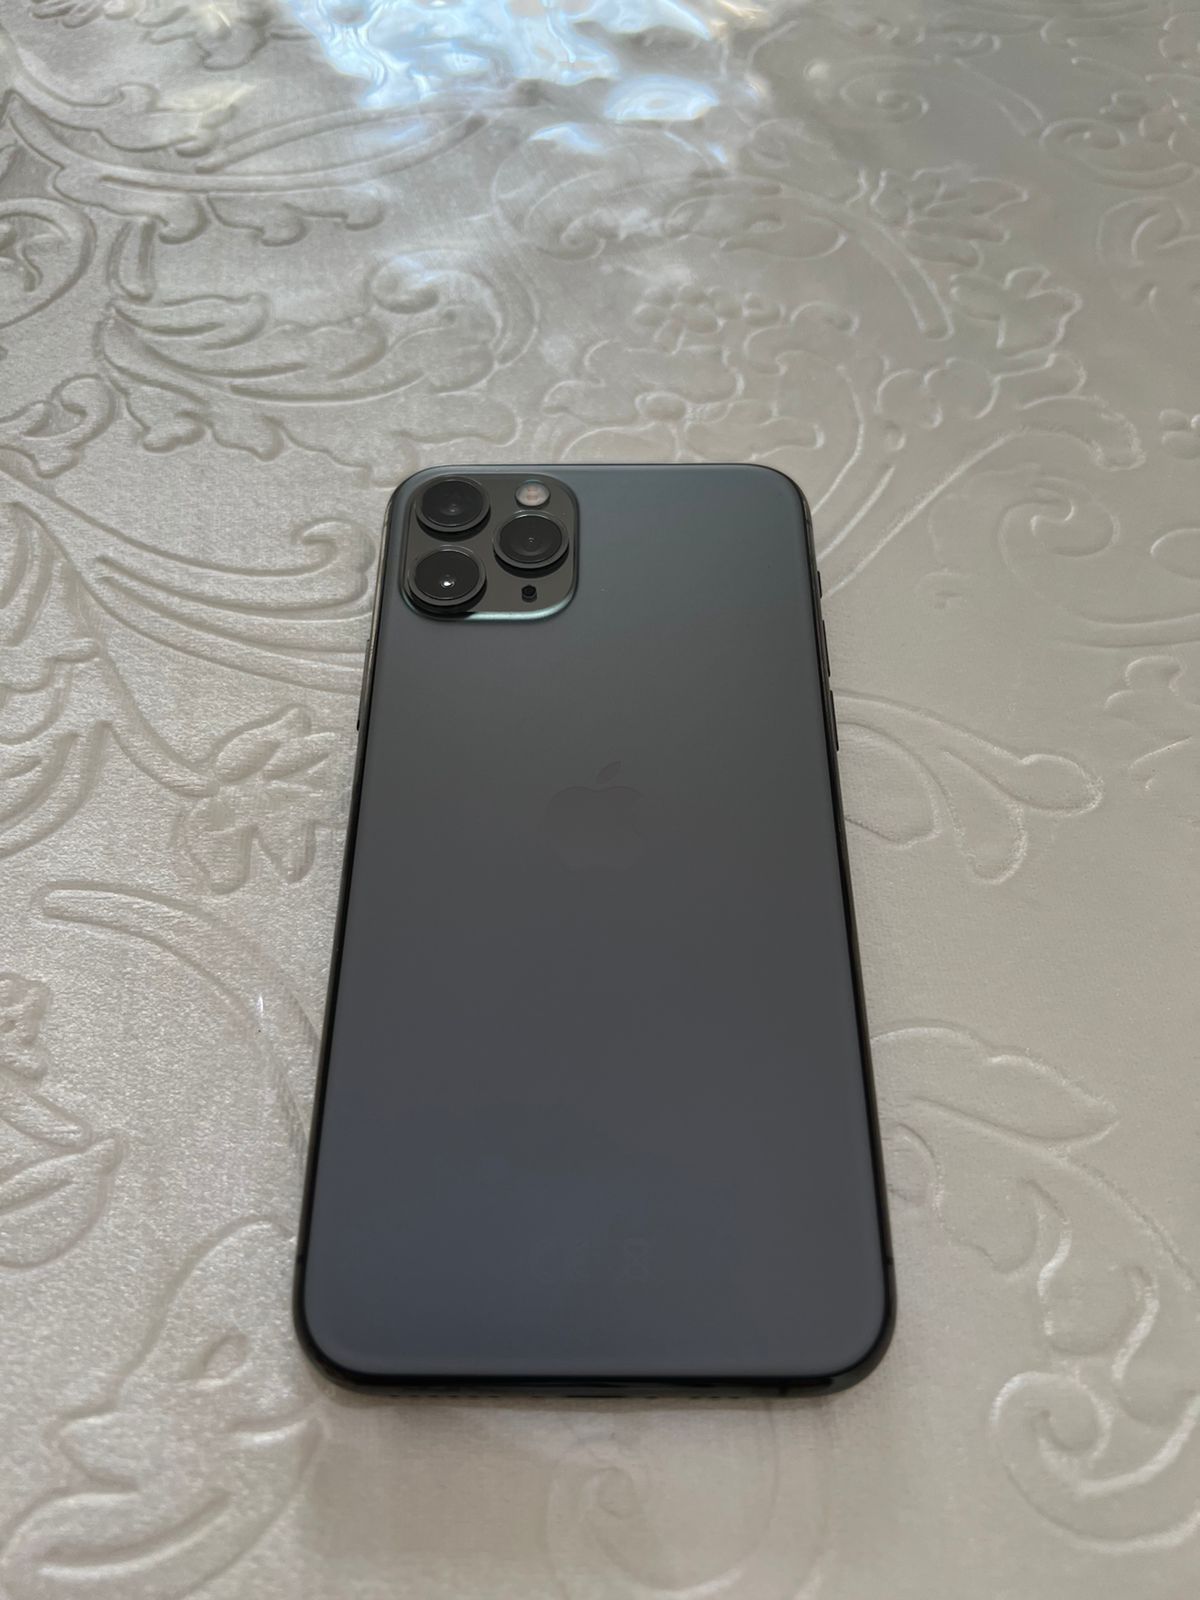 Apple Iphone 11 pro 2019